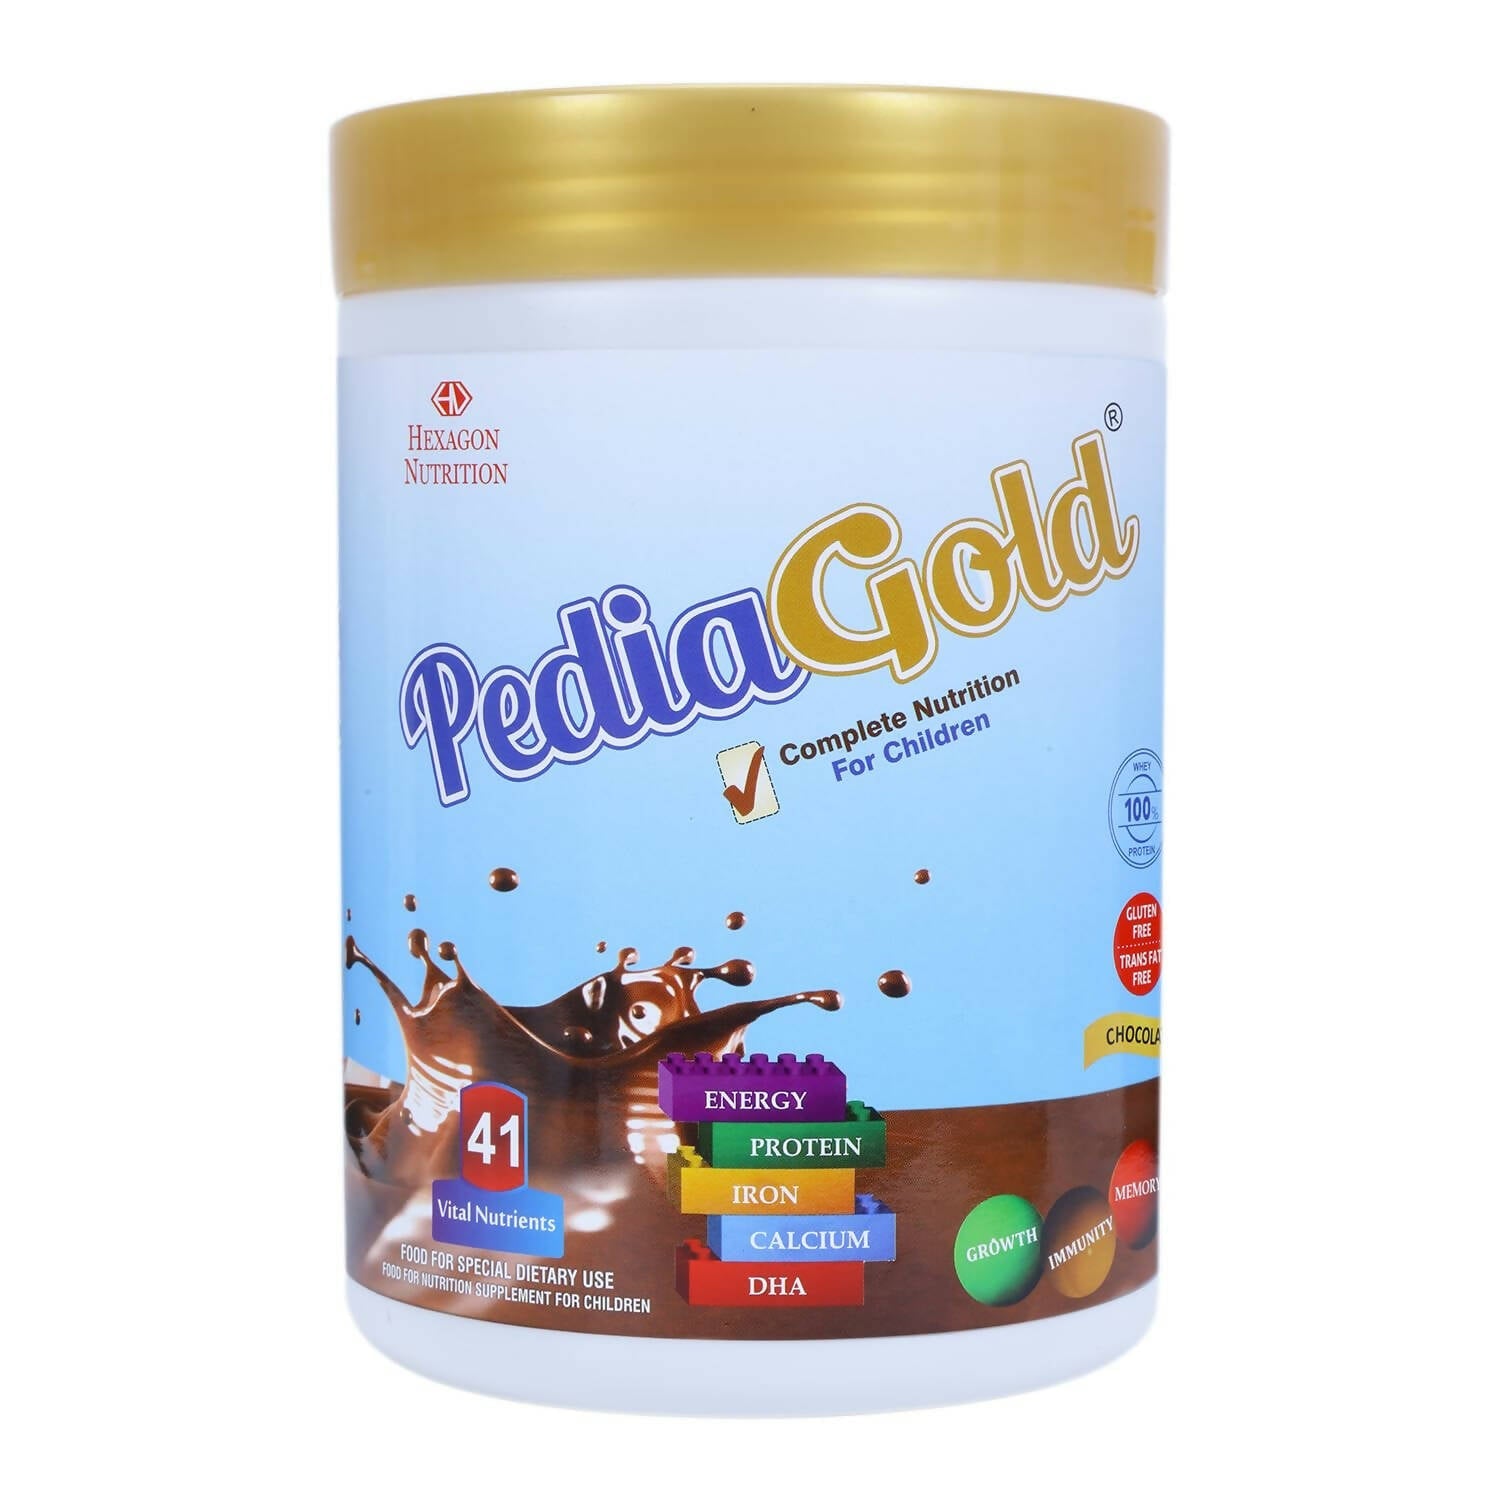 PediaGold Complete Nutrition Powder For Children - BUDNE